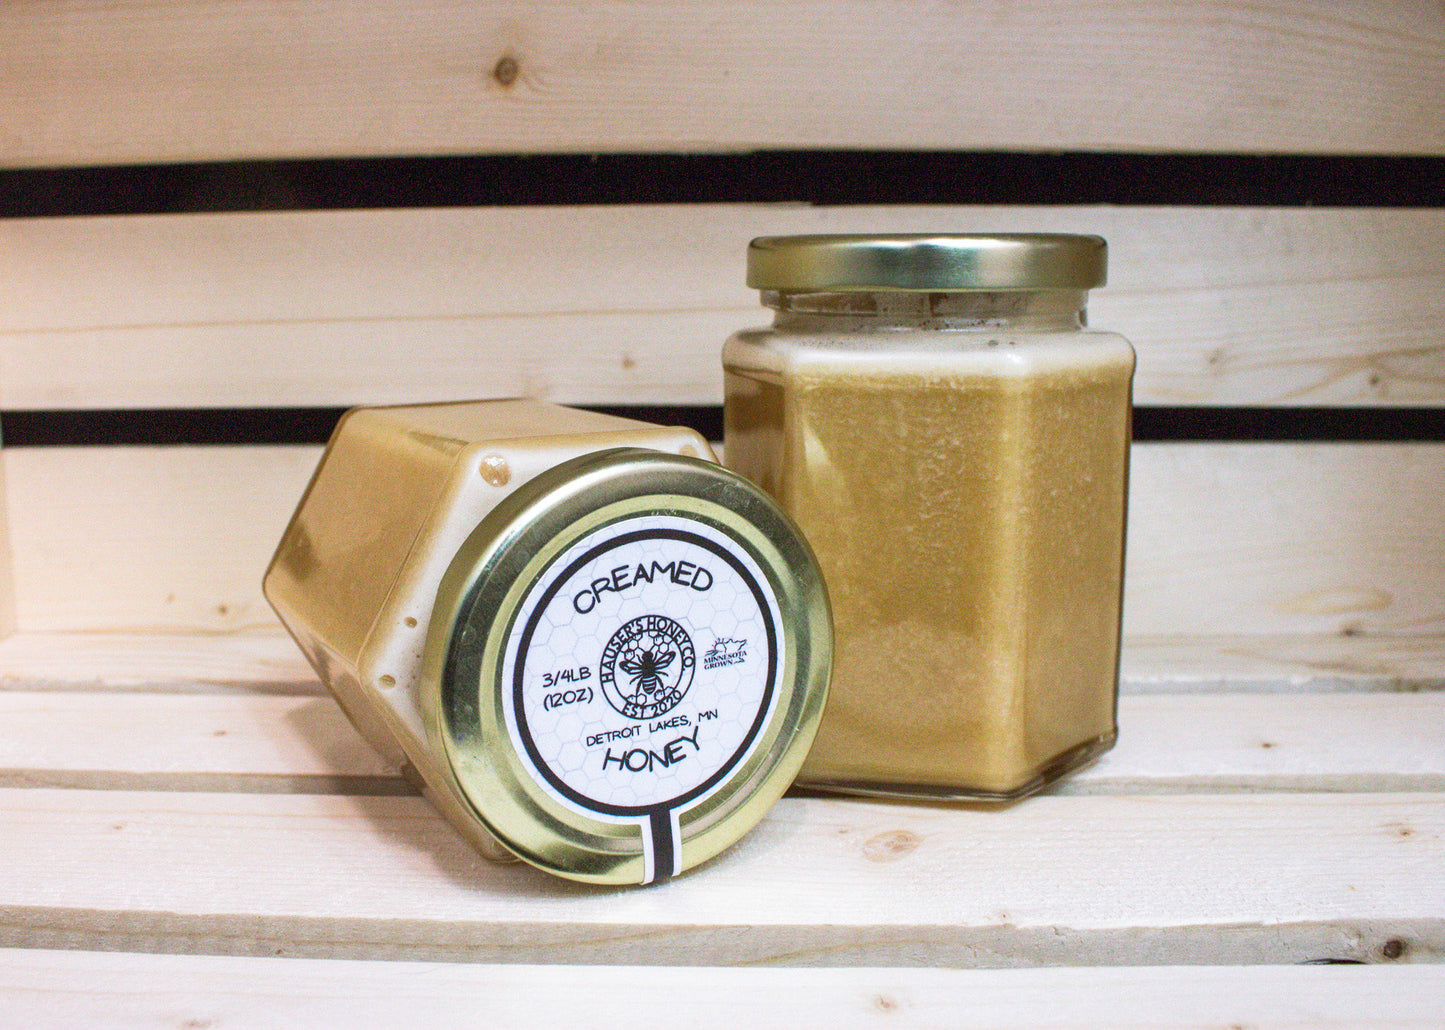 Raw Unfiltered Creamed Honey 3/4lb (12oz)